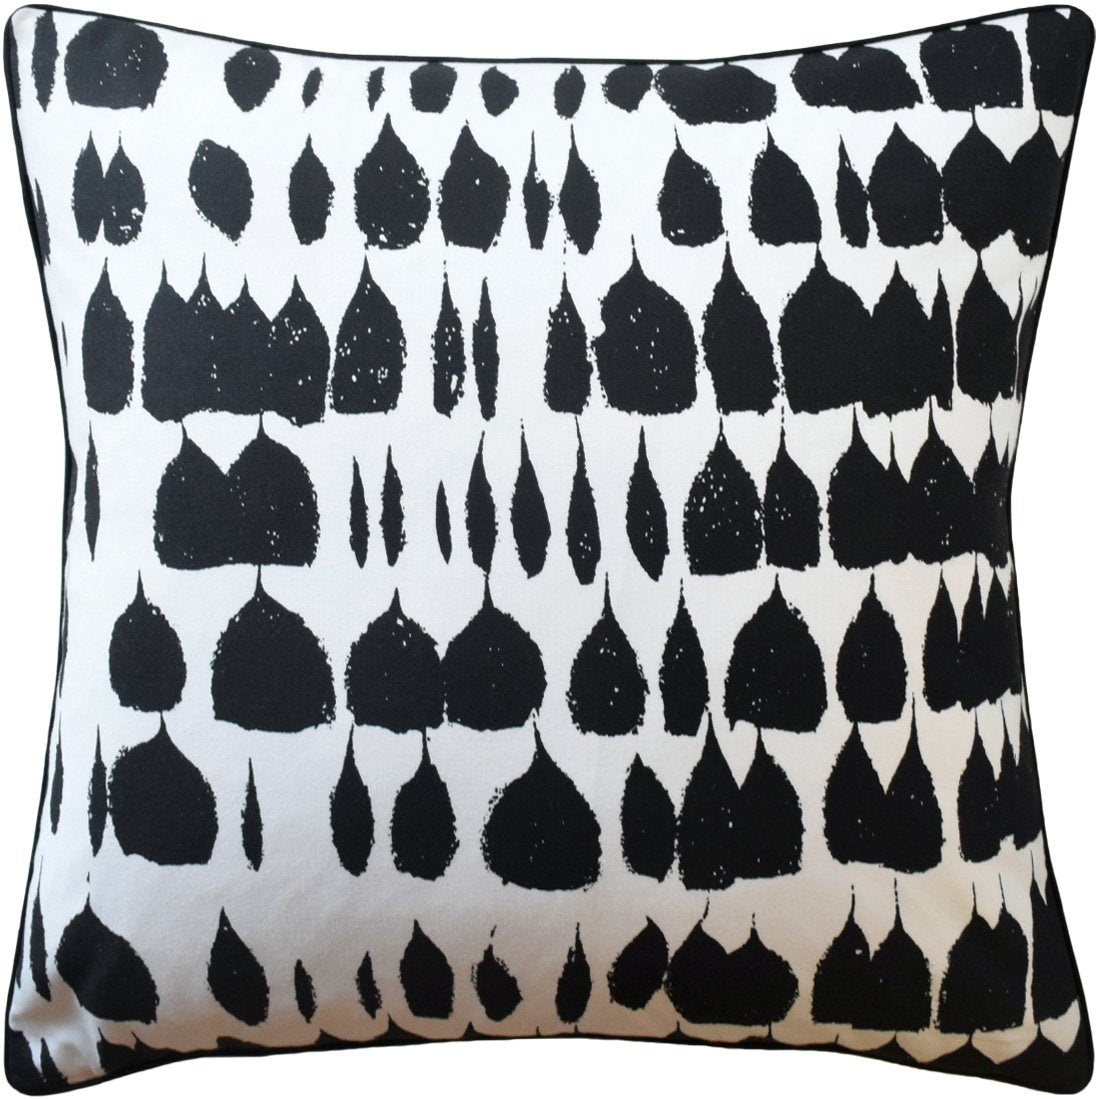 Queen of Spain Black Decorative Pillows by Ryan Studio | Schumacher Fabric